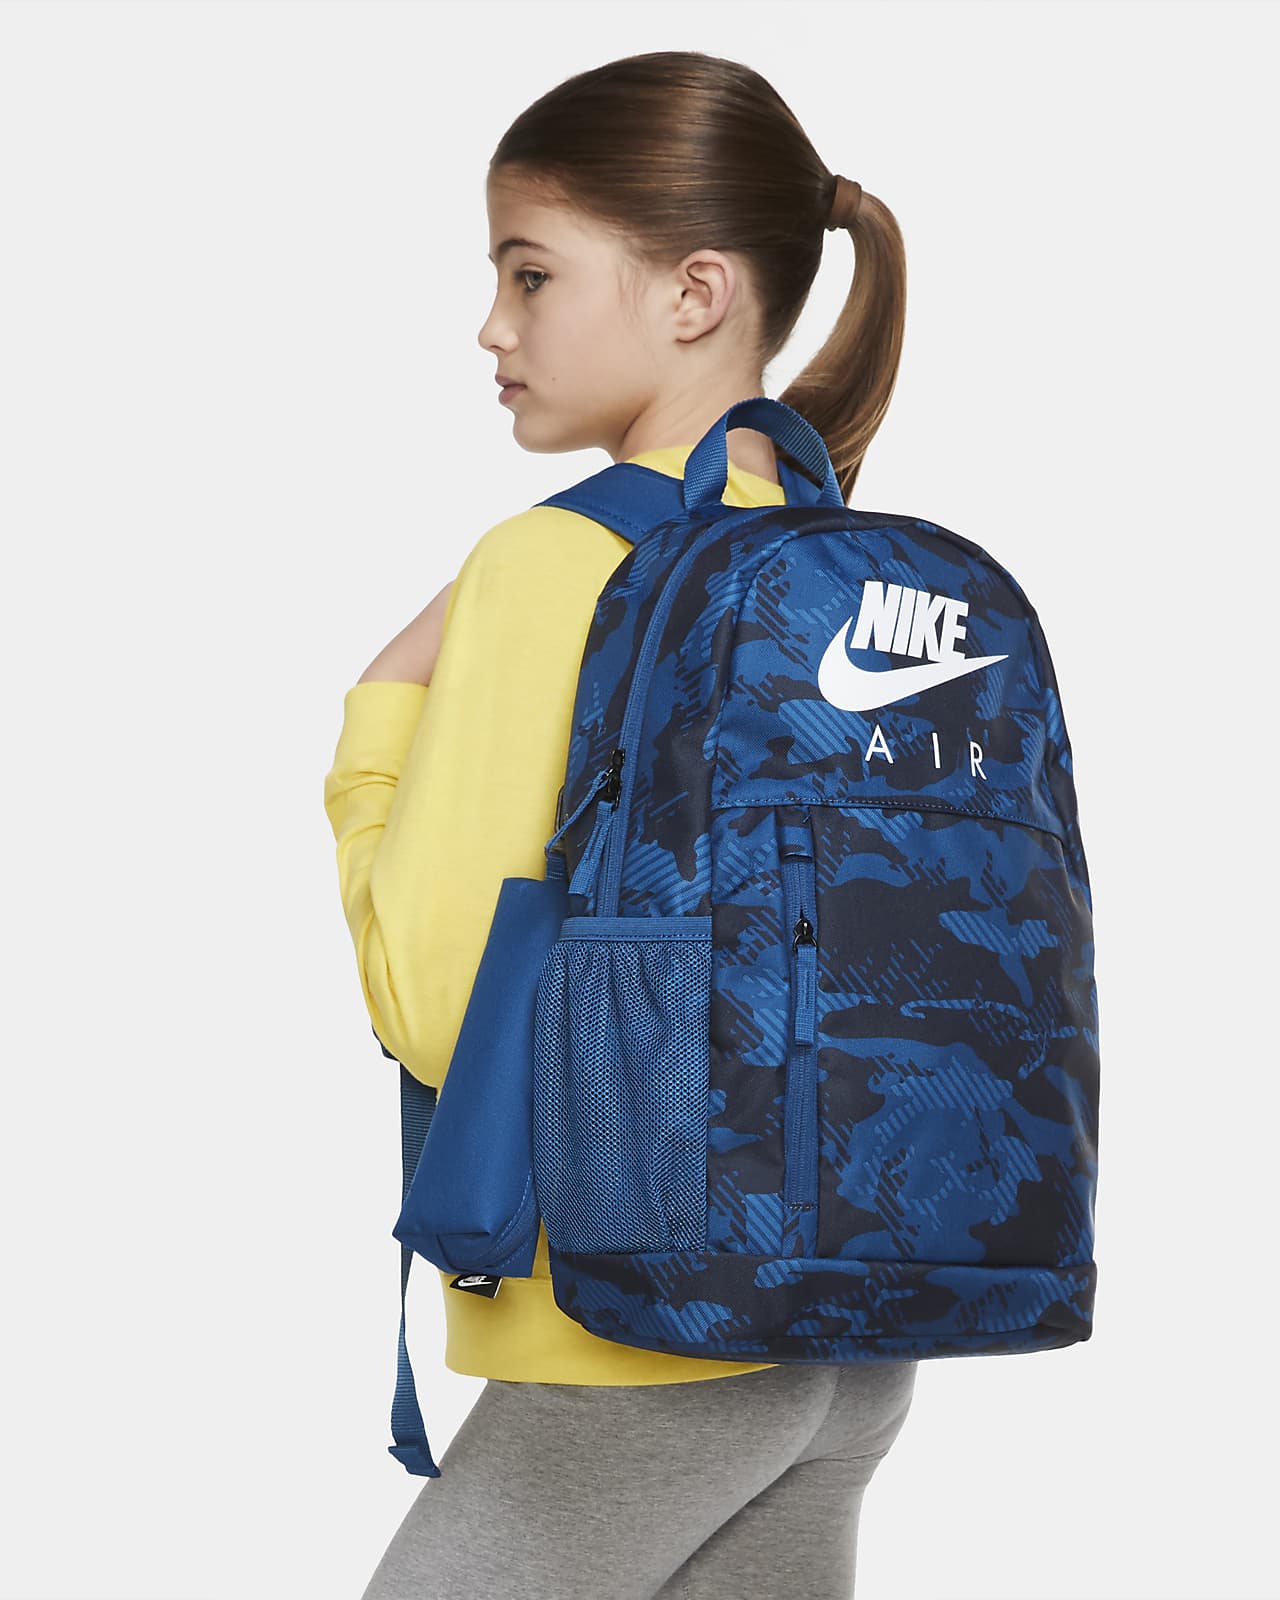 Nike Elemental Kids' Printed Backpack (20L).